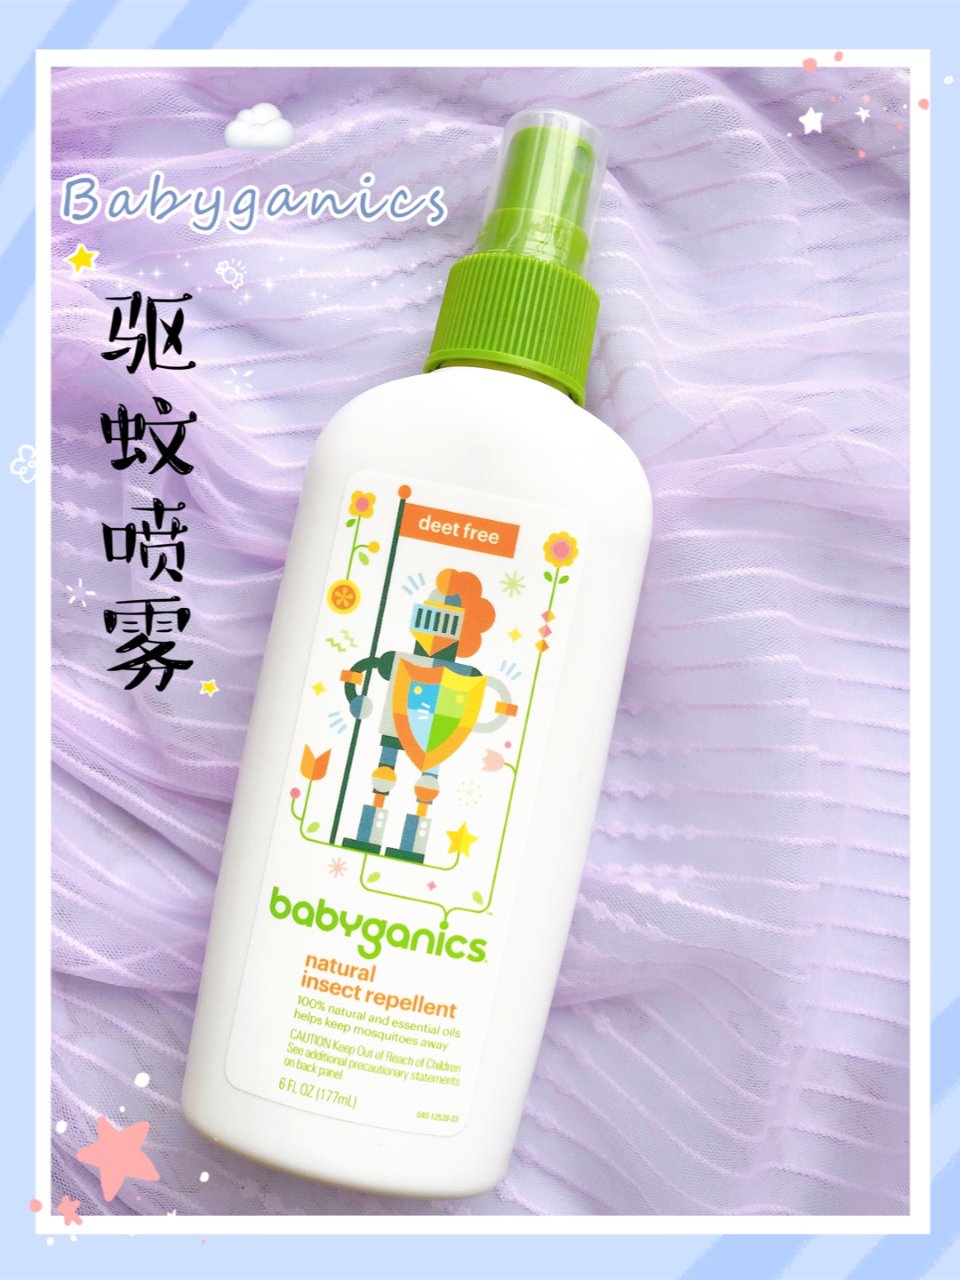 BabyGanics 甘尼克宝贝,Walmart 沃尔玛,Babyganics Natural Insect Repellent, 6 O